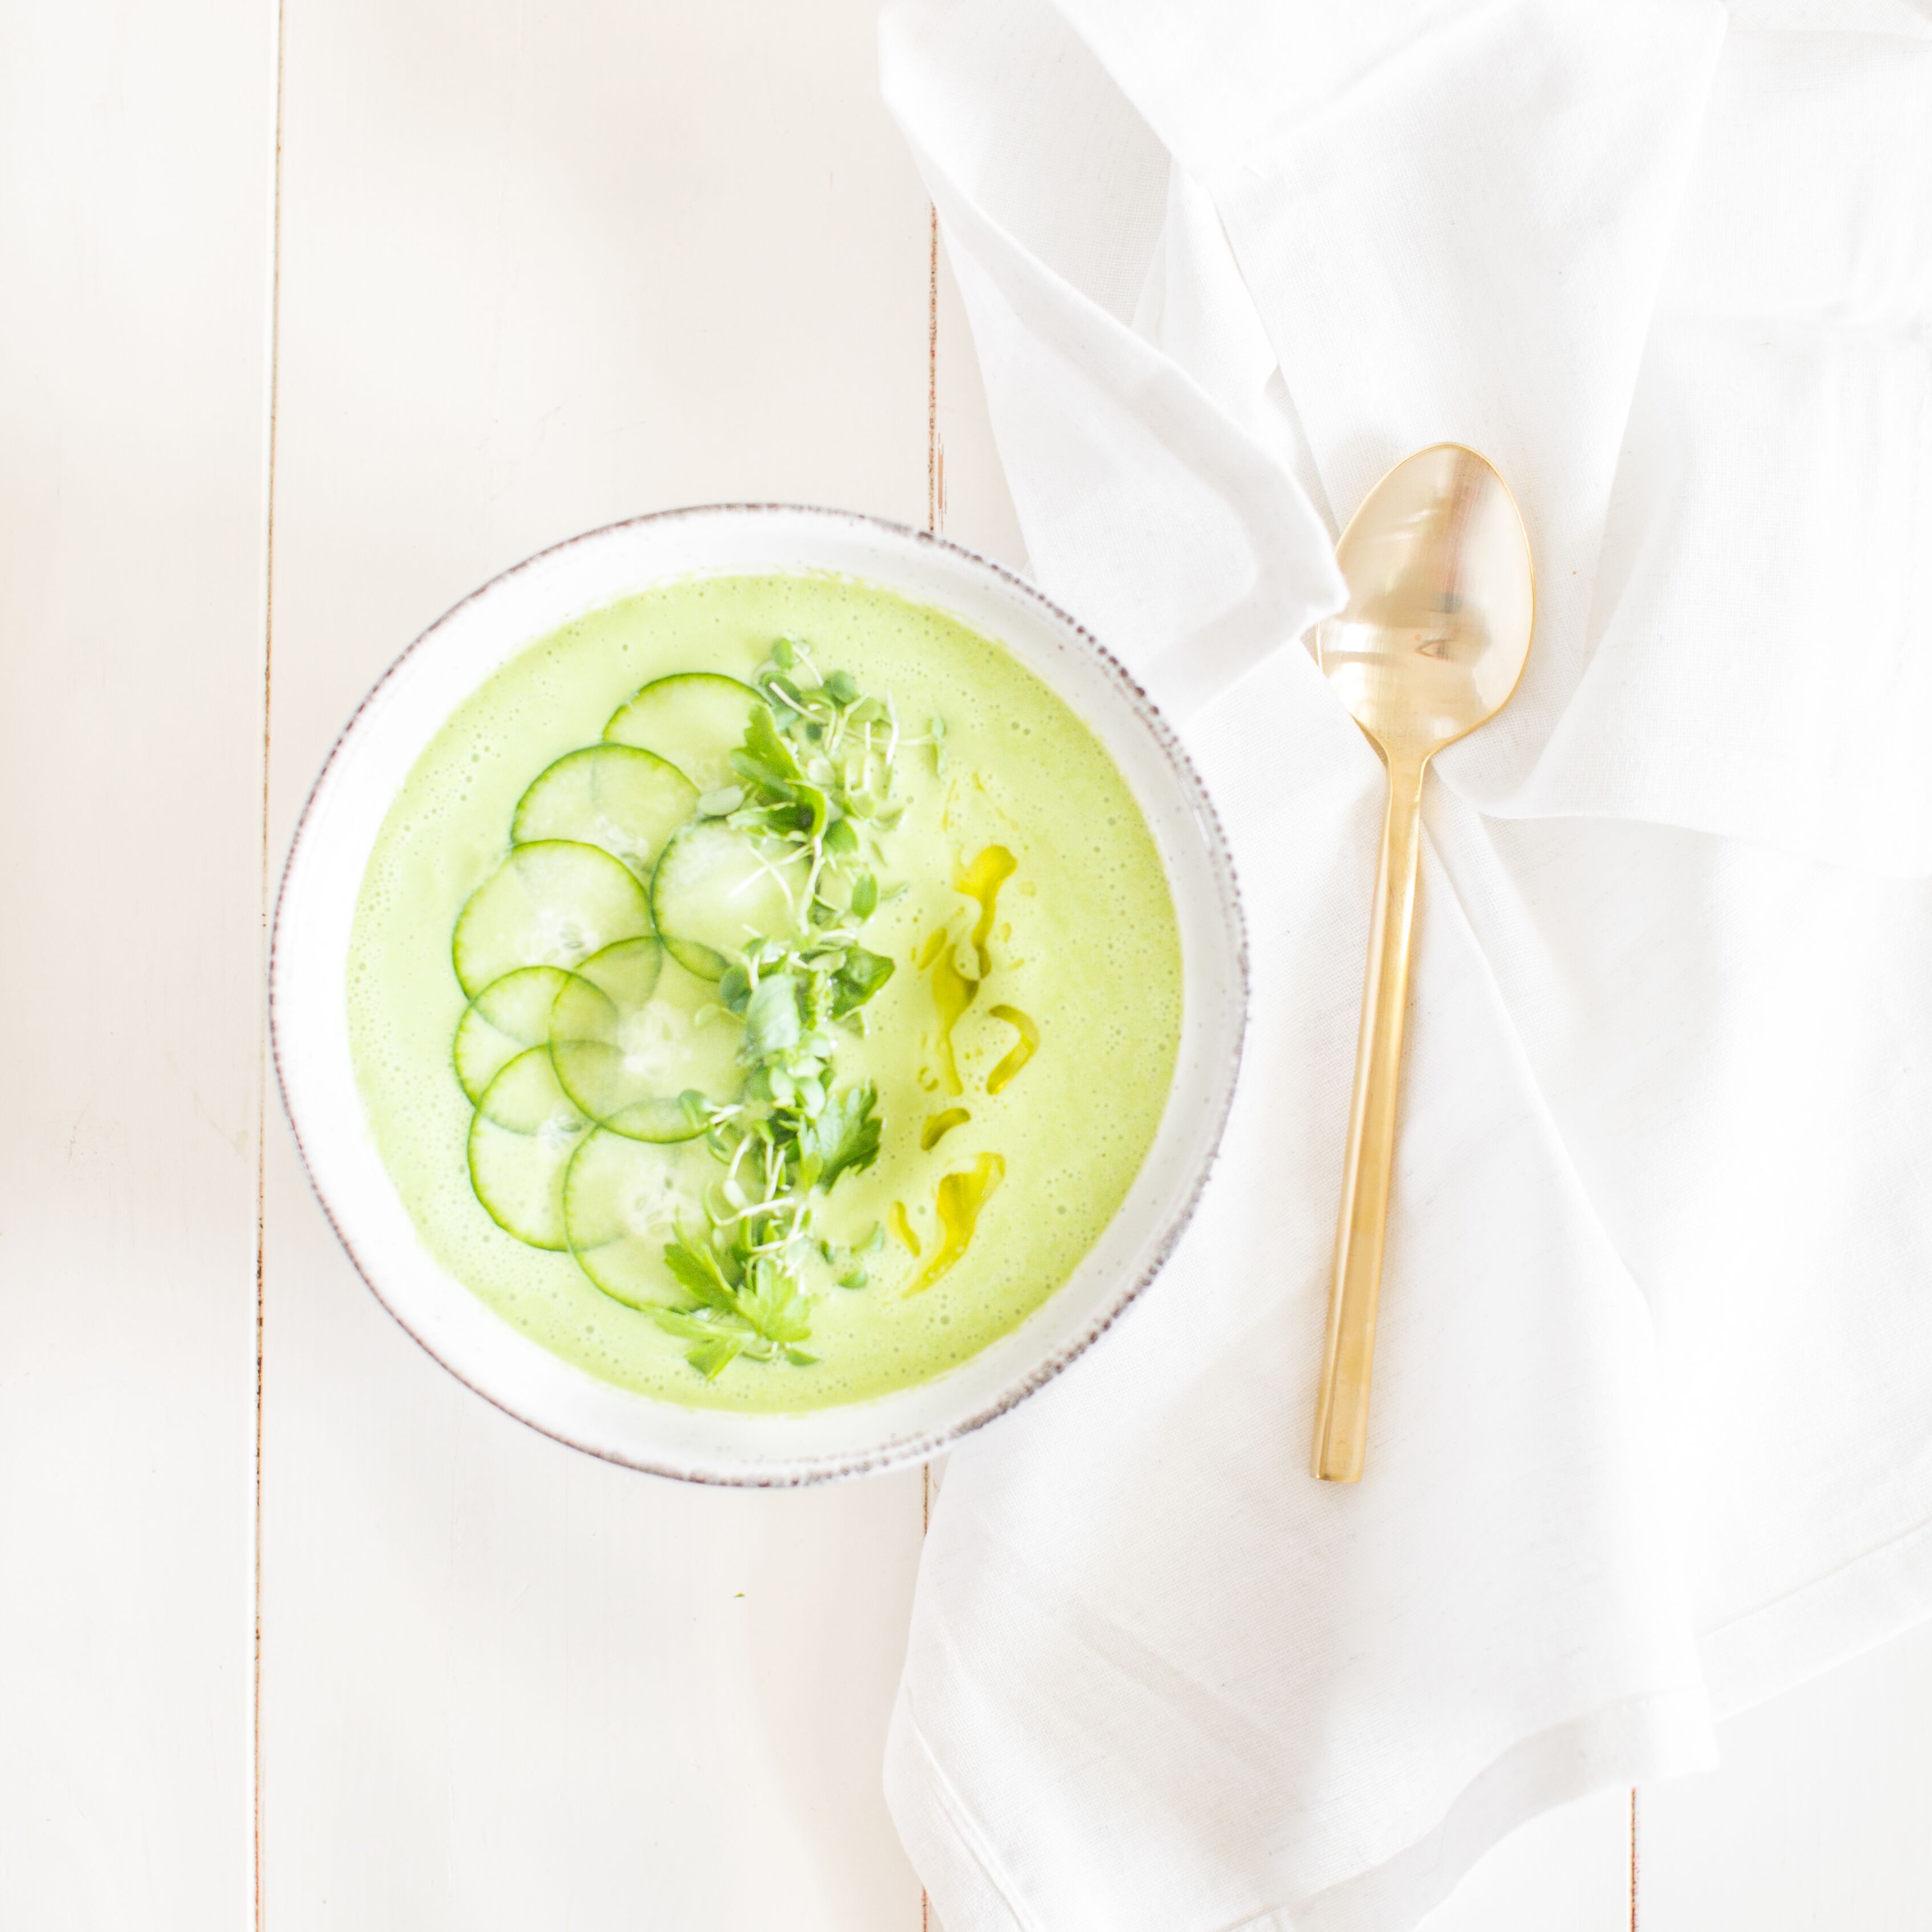 Green Gazpacho (cold cucumber soup)